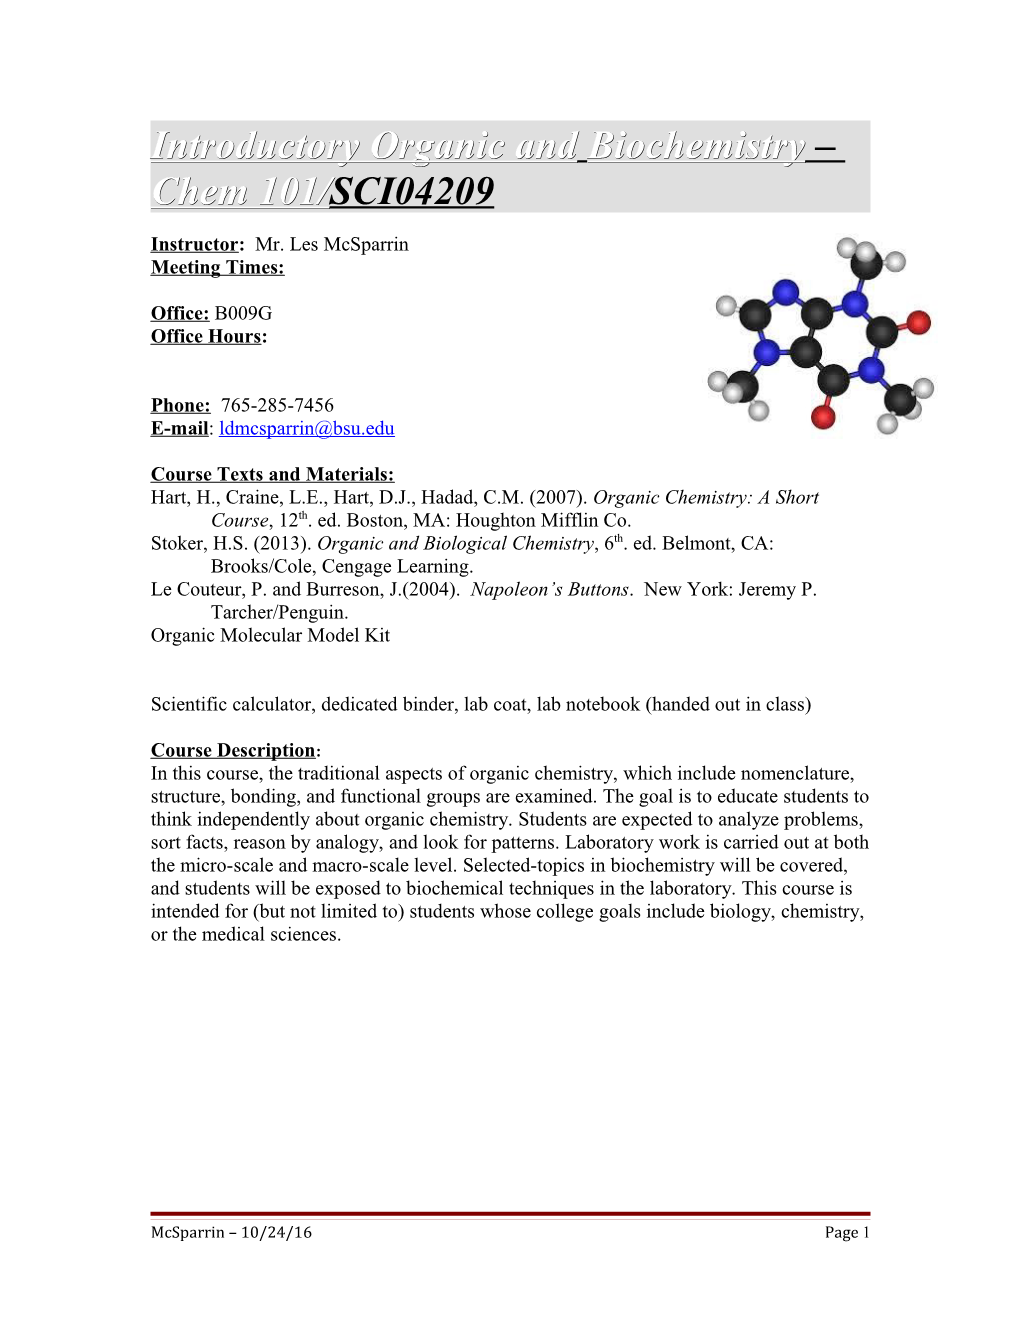 Introductory Organic and Biochemistry Chem 101/SCI04209